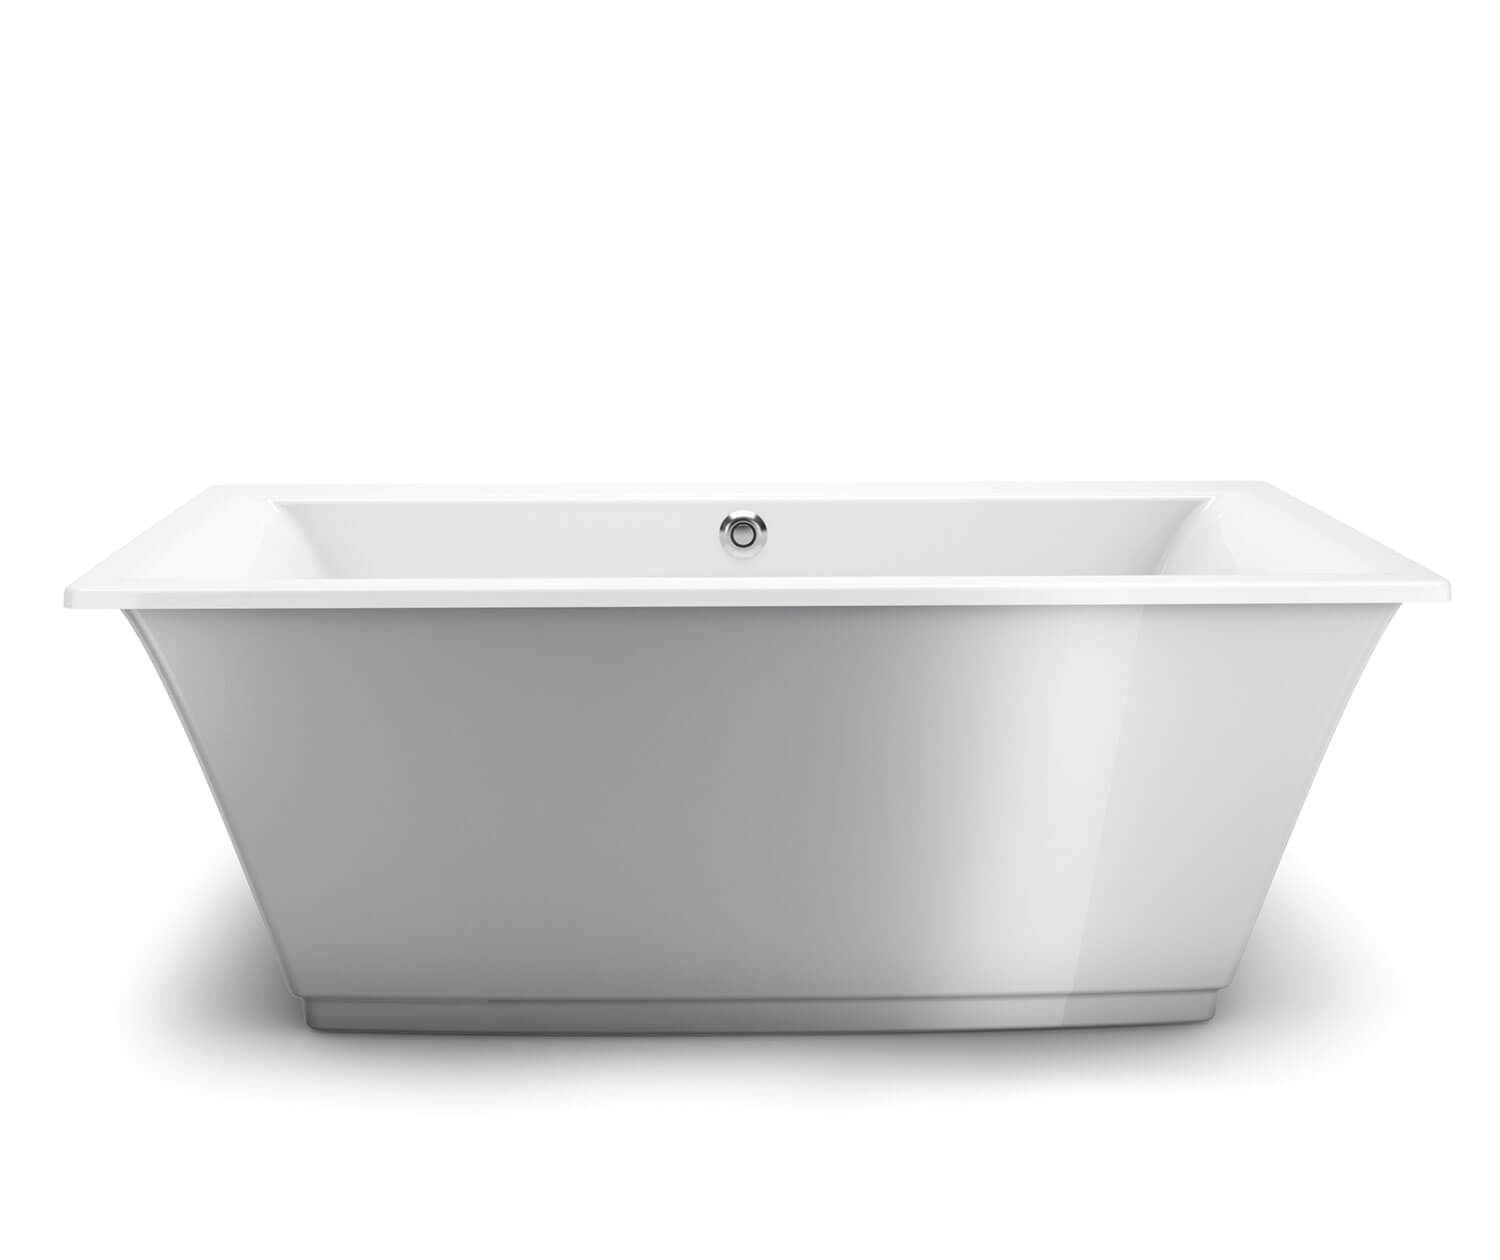 Optik 6636 F Acrylic Freestanding Center Drain Bathtub in White 